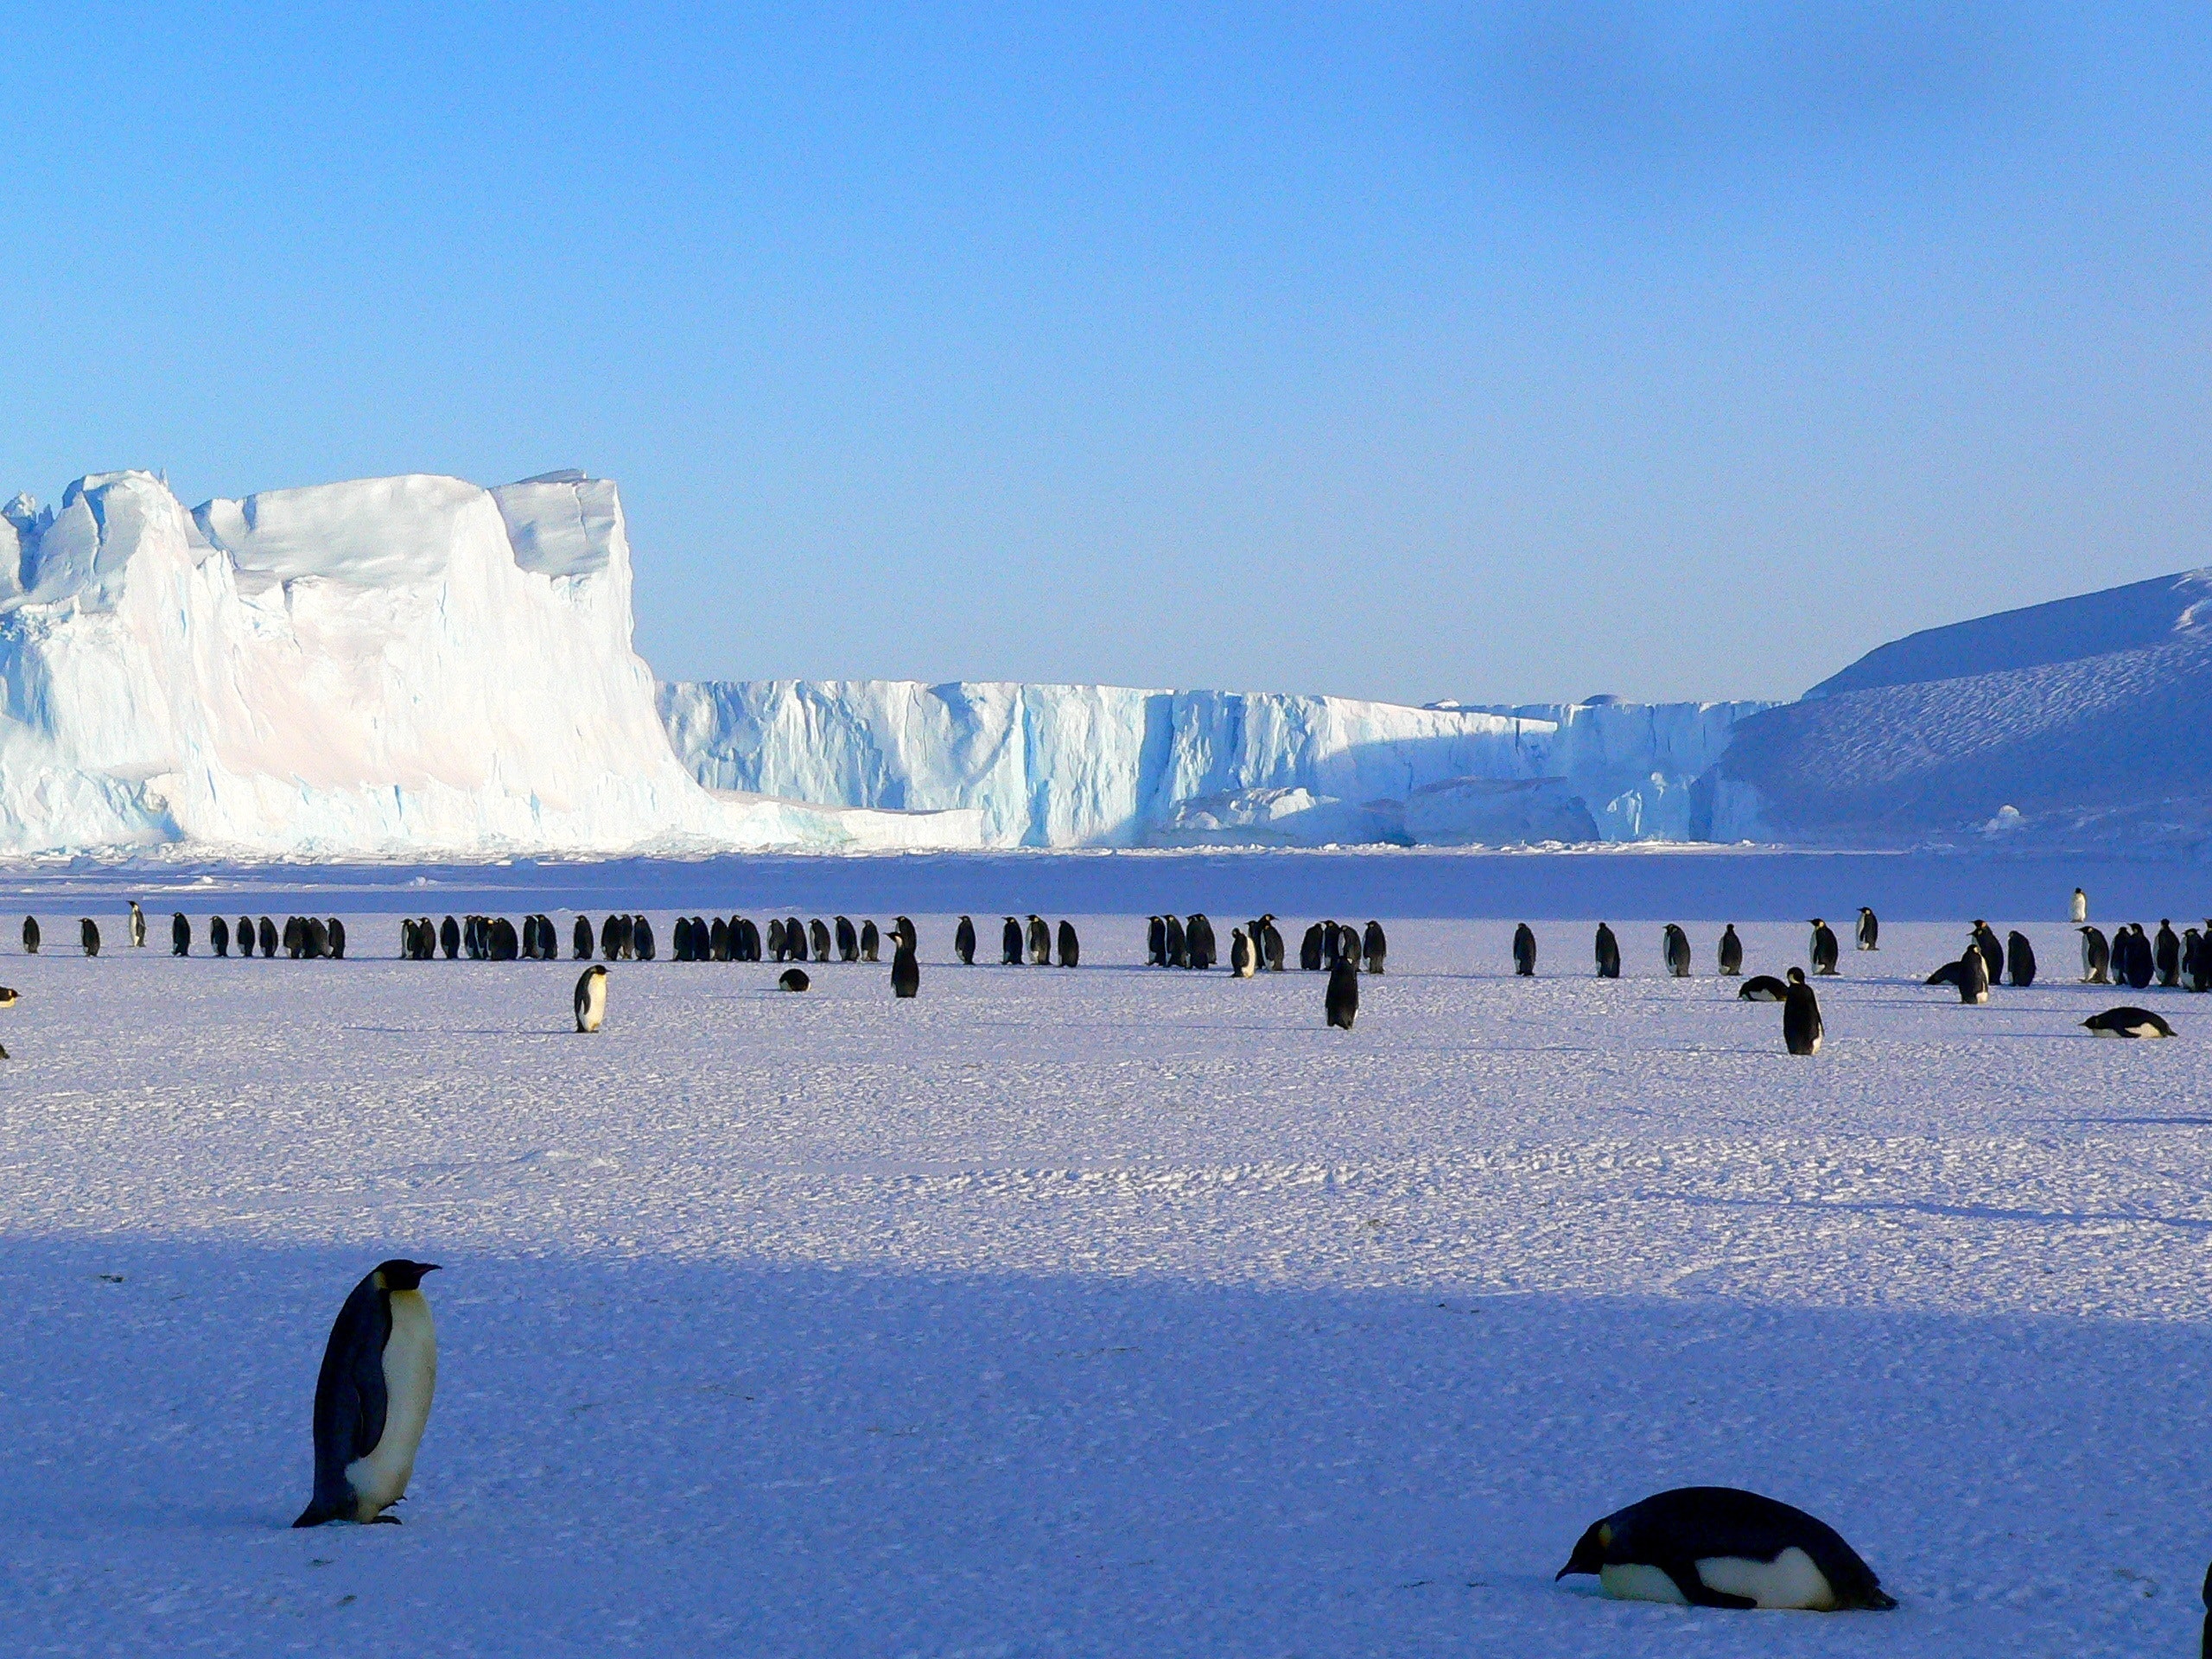 A glacial view of Antarctica.